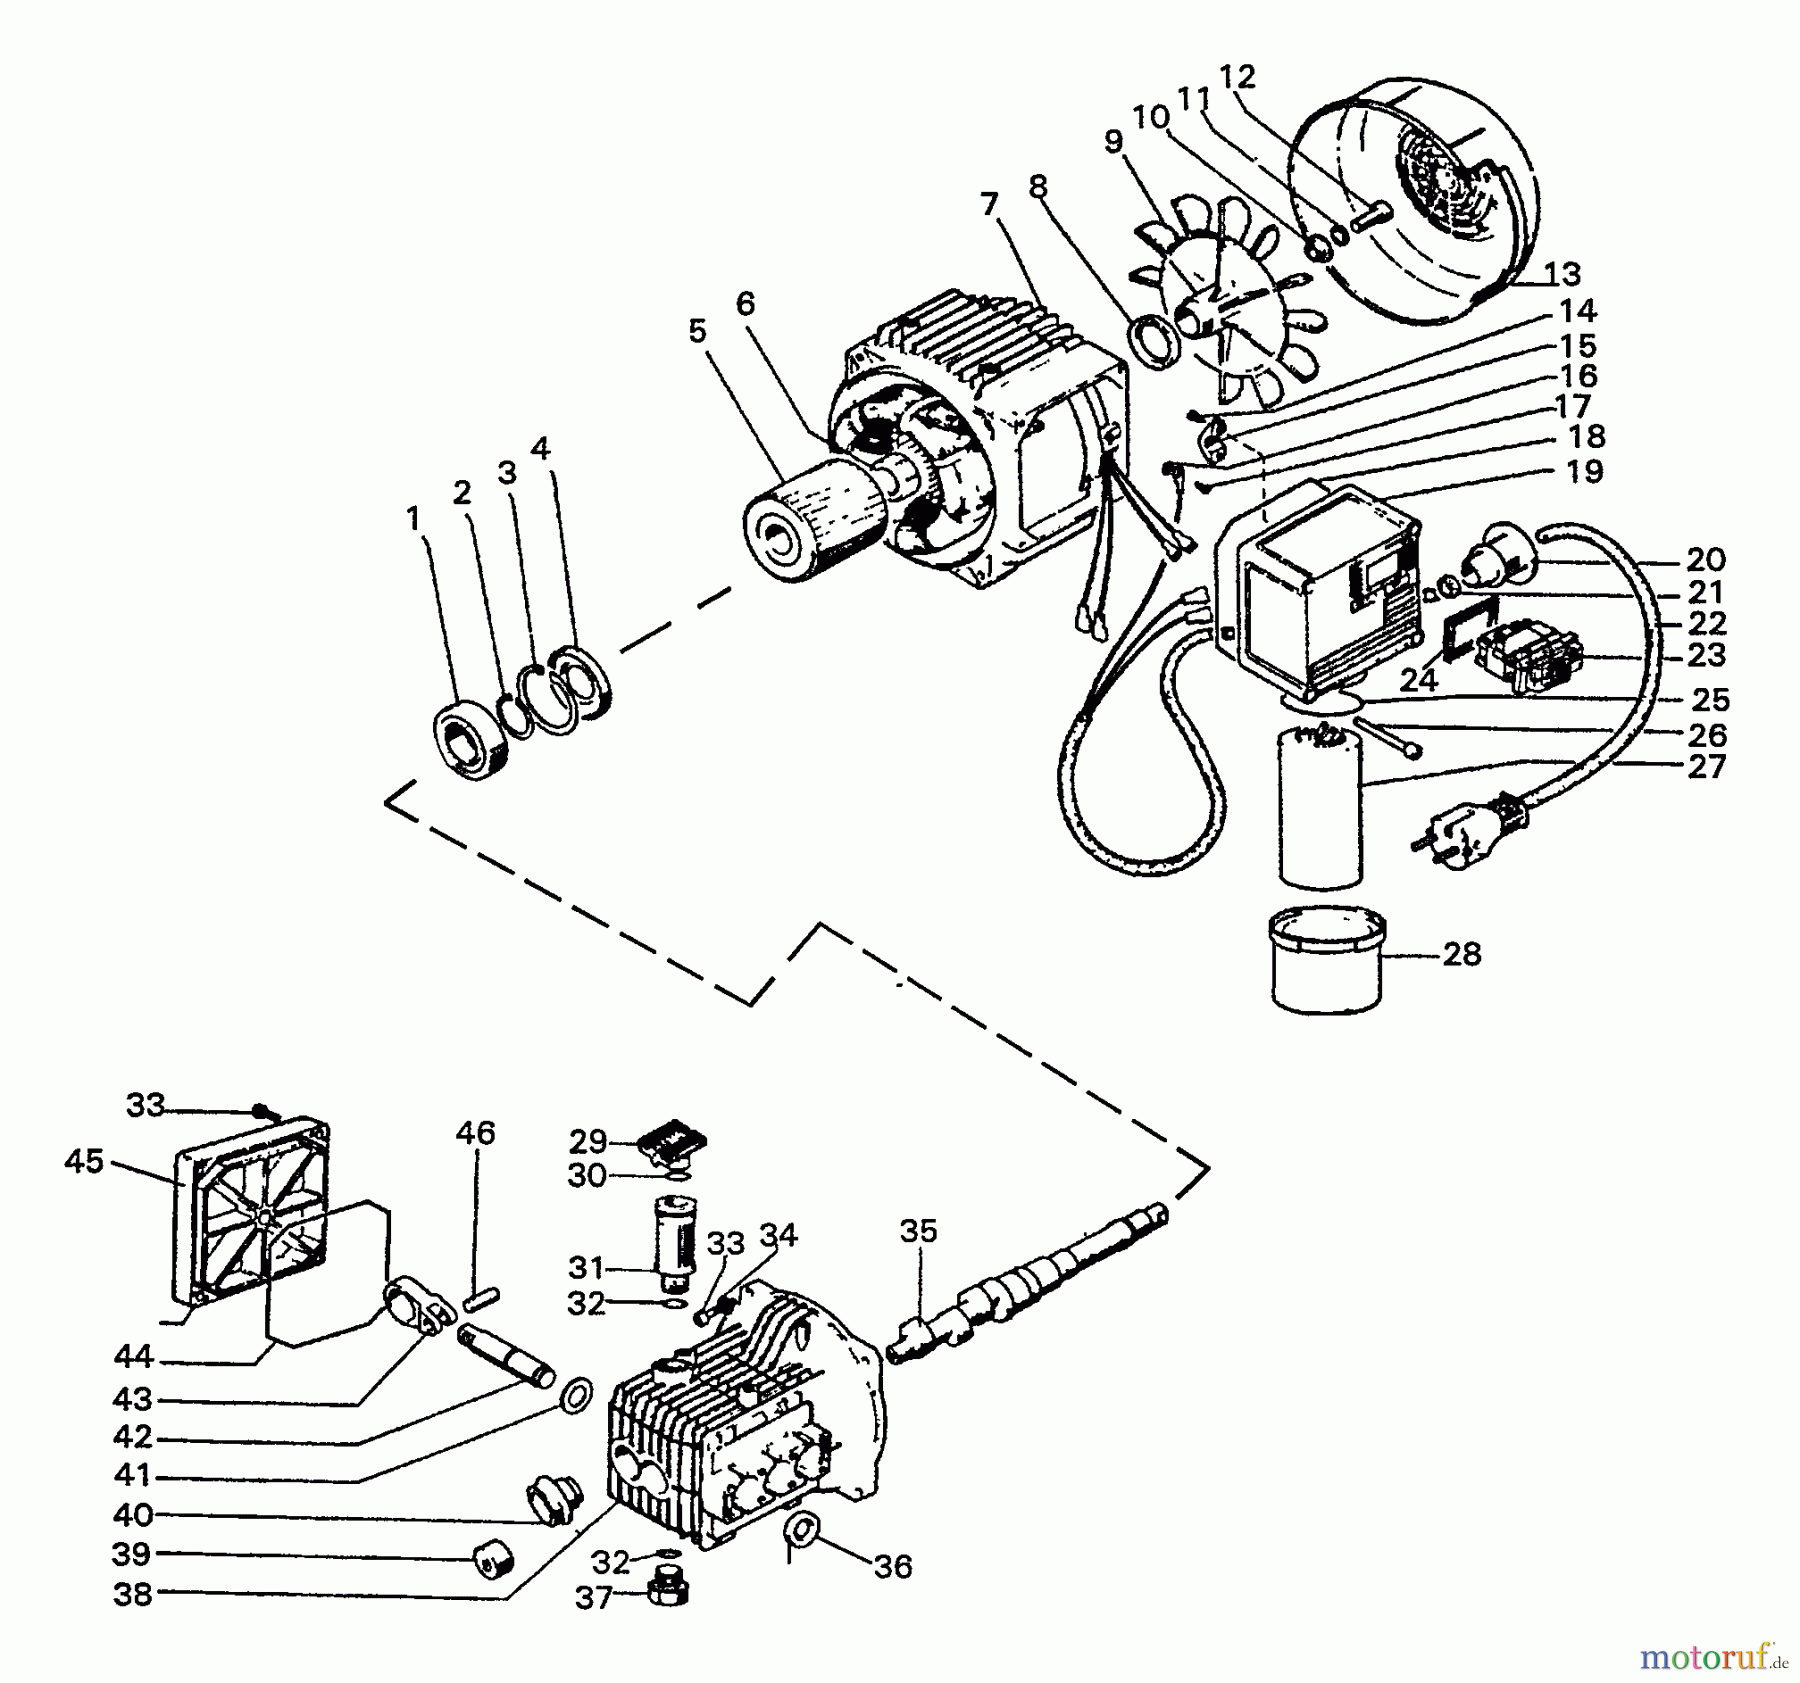  Echo Hochdruckreiniger HPP-1890 - Echo Pressure Washer, S/N: 1457 - 1606 (1993 and 1994 Models) Crankcase, Crankshaft, Piston, Electric Motor, Switch